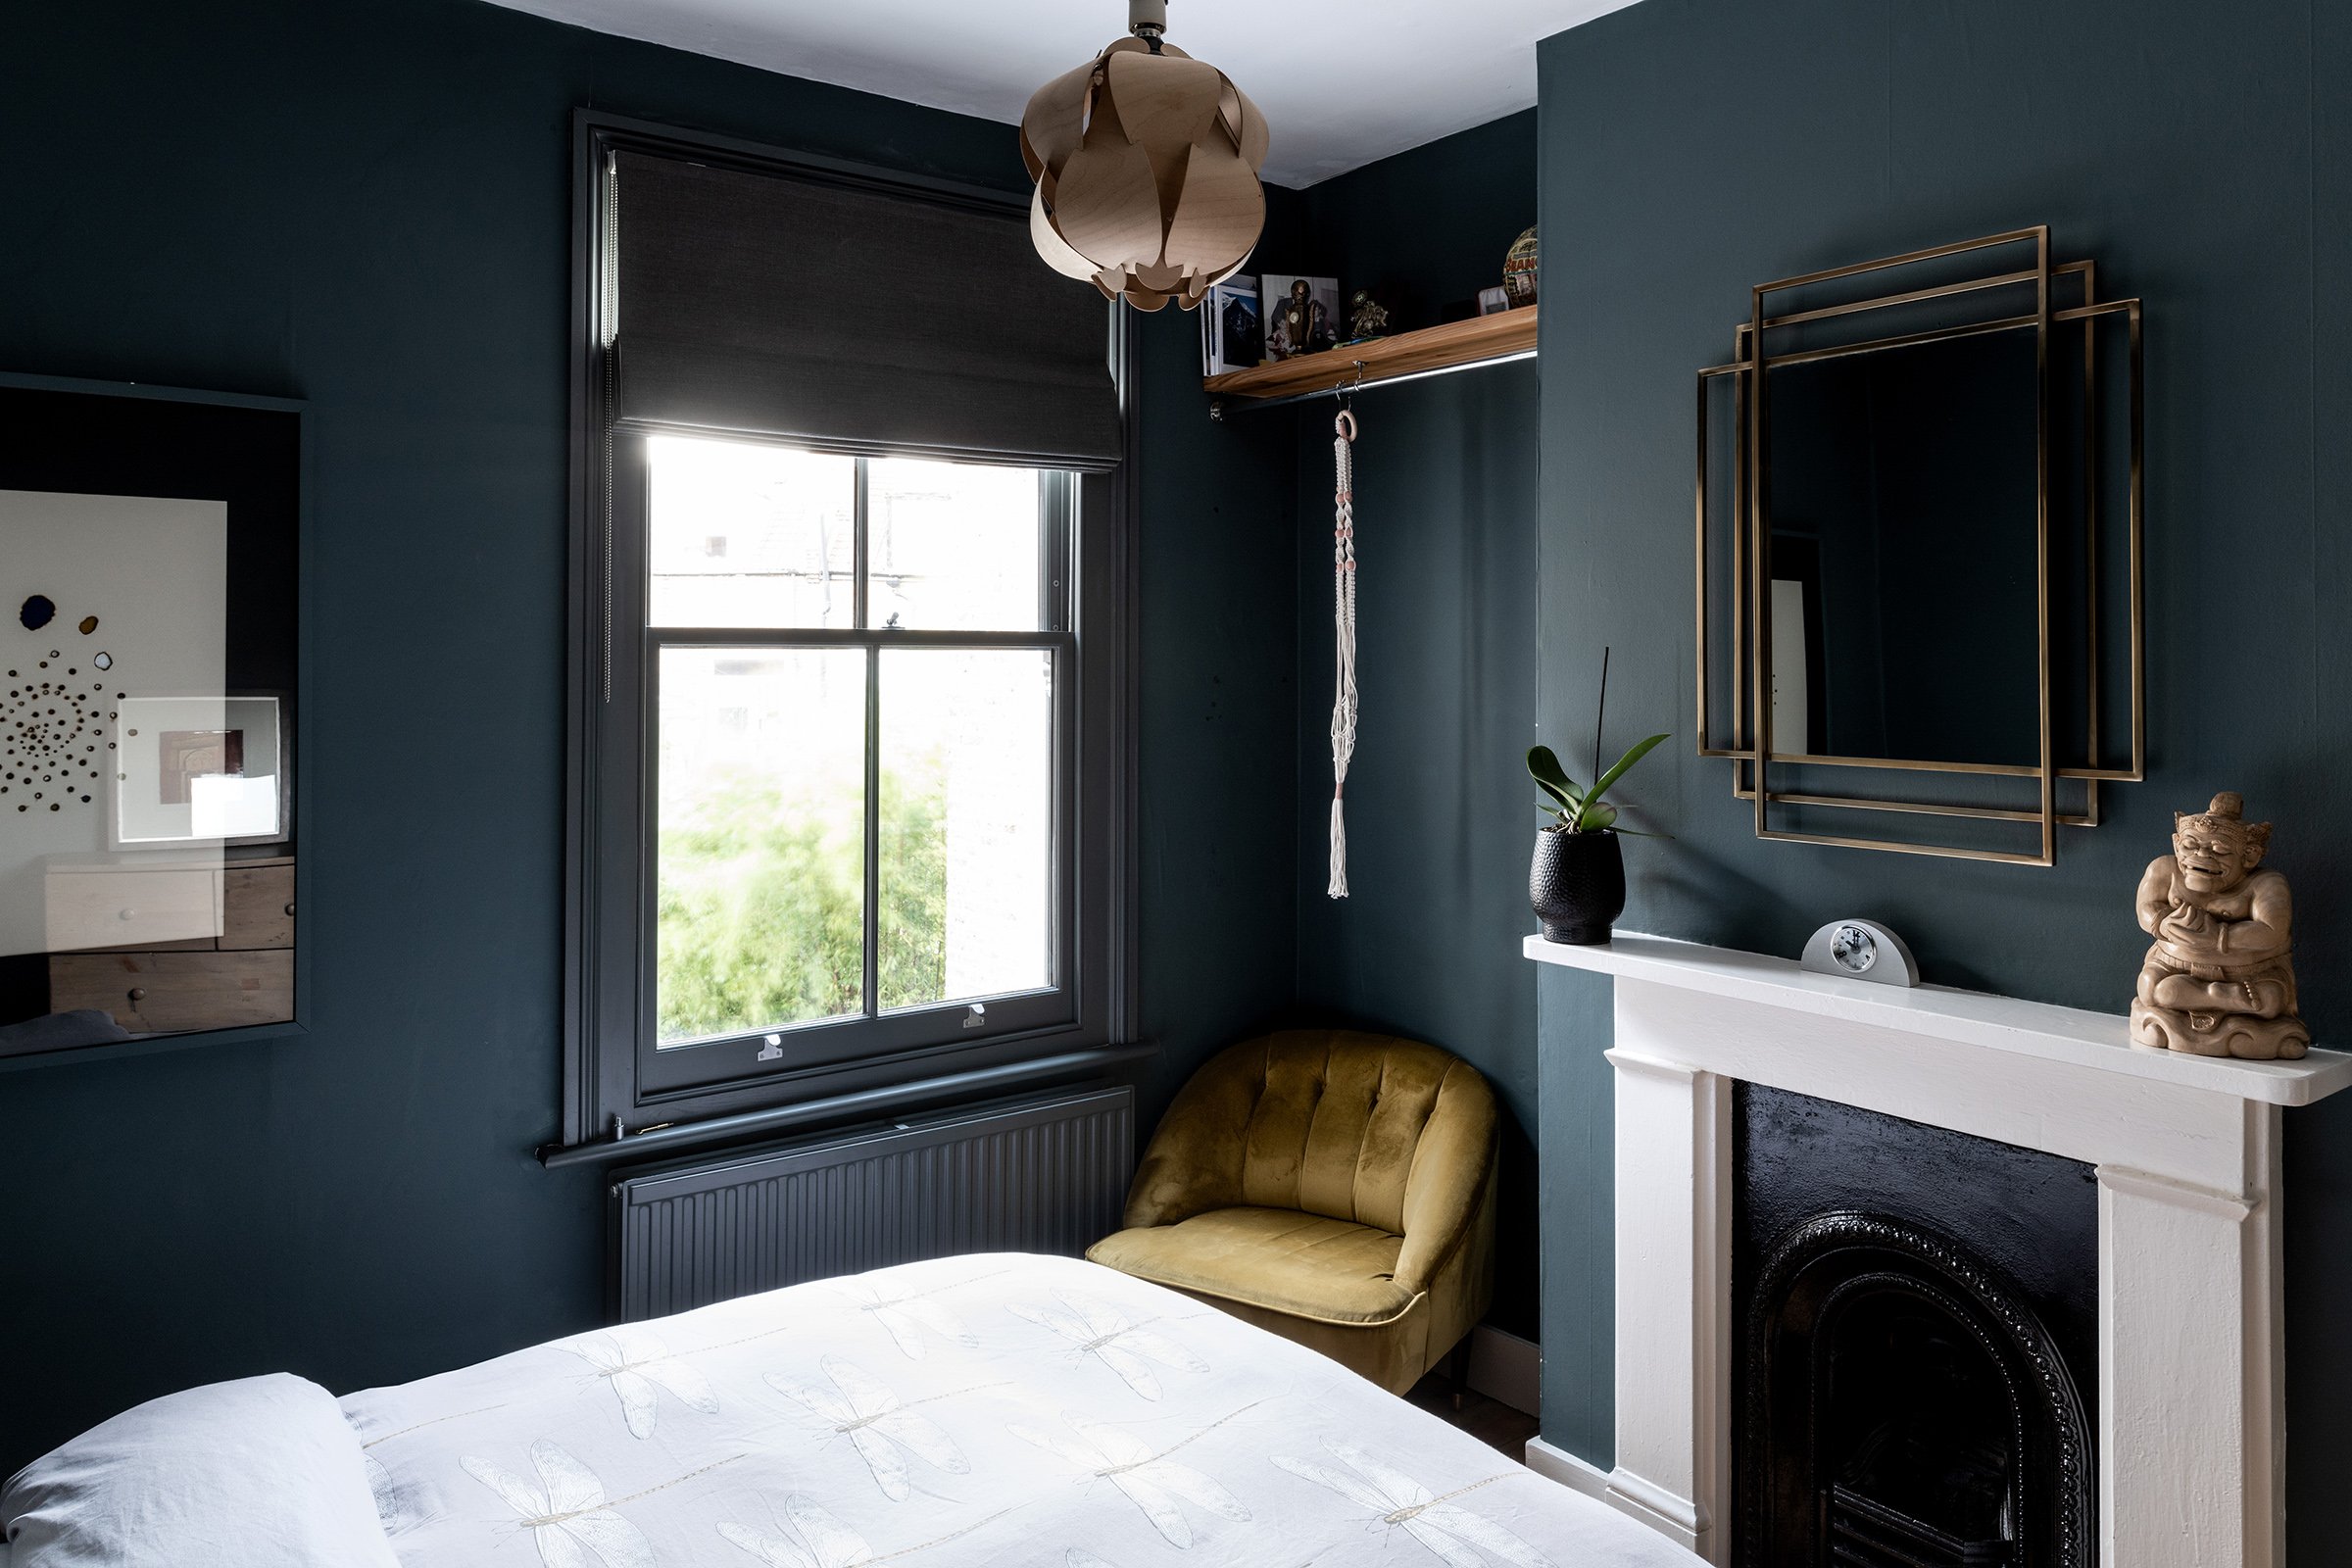 13-mcdowall-road-bedroom-interior-design-architecture-london-uk-rider-stirland-architects.jpg